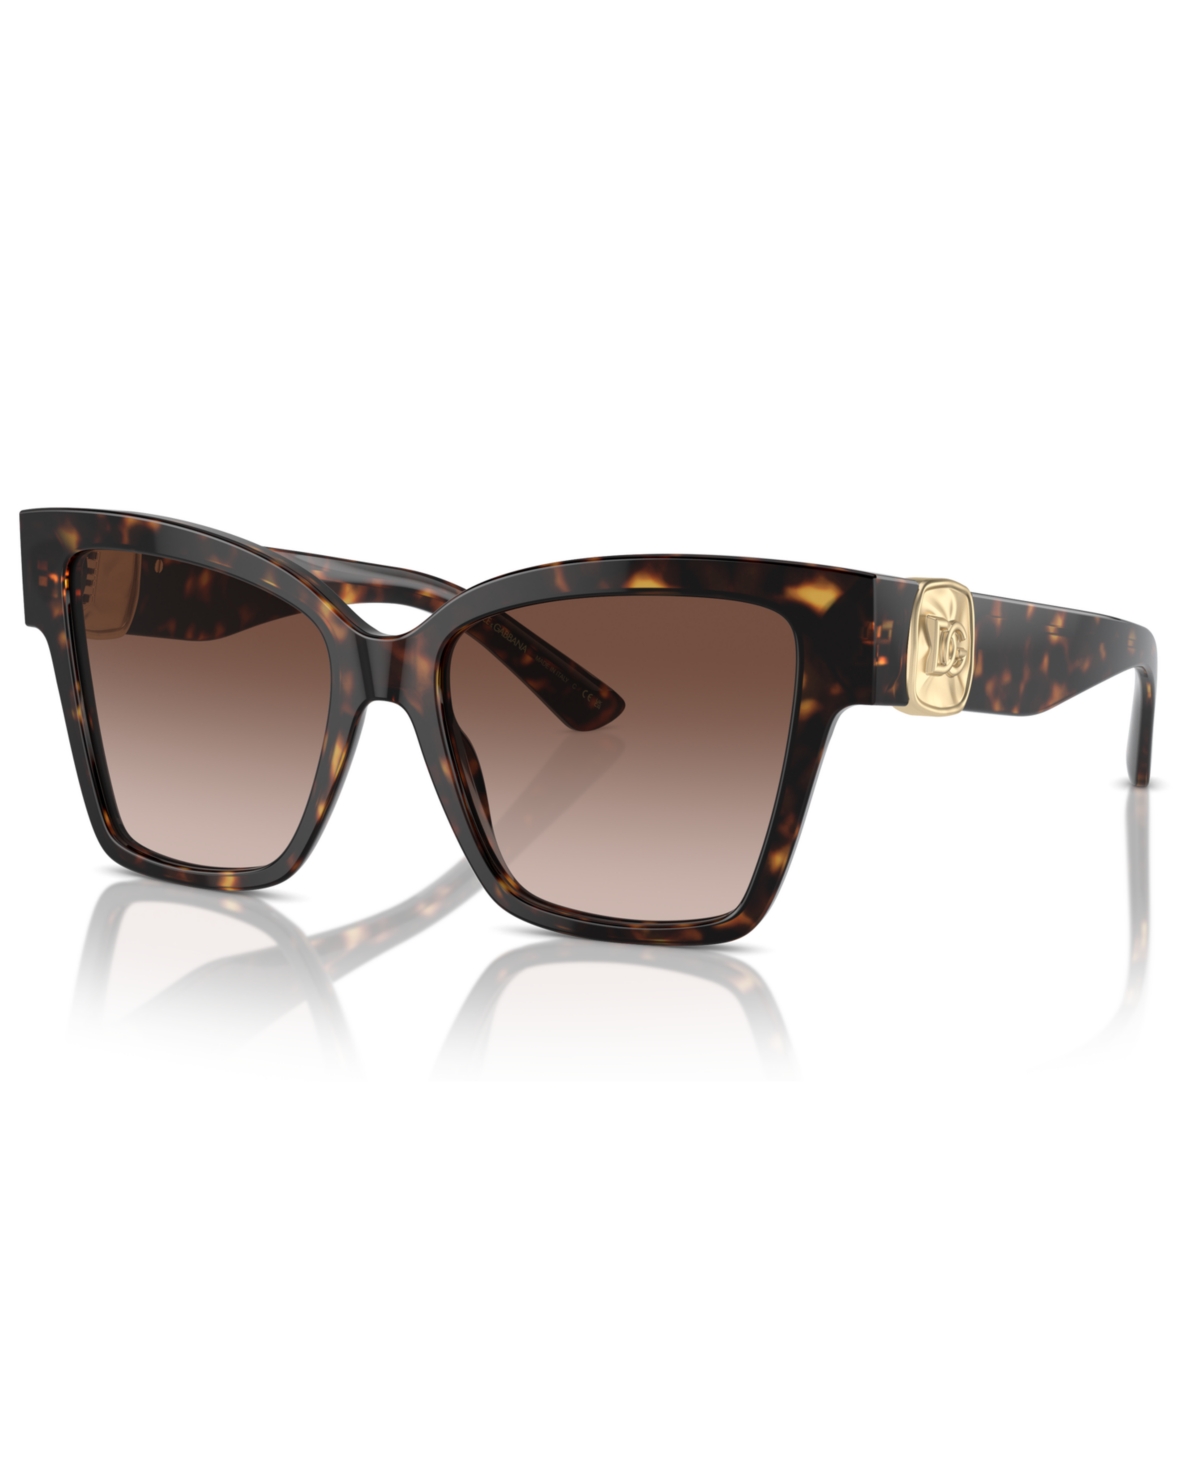 Dolce&Gabbana Women's Sunglasses, Dg4470 - Havana